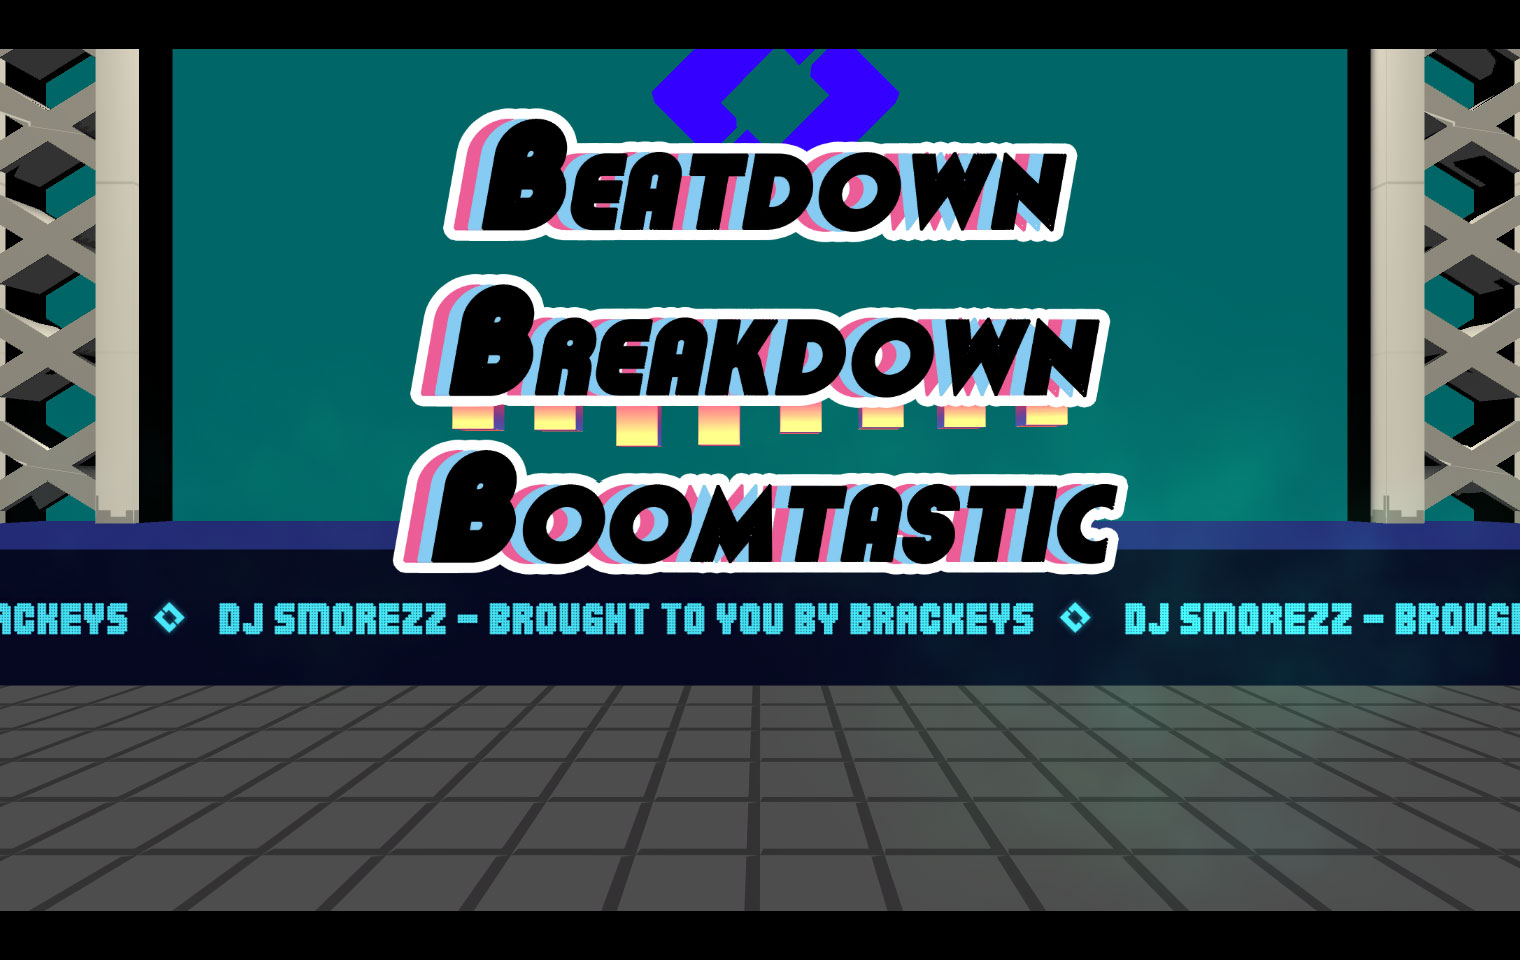 Beatdown Breakdown Boomtastic